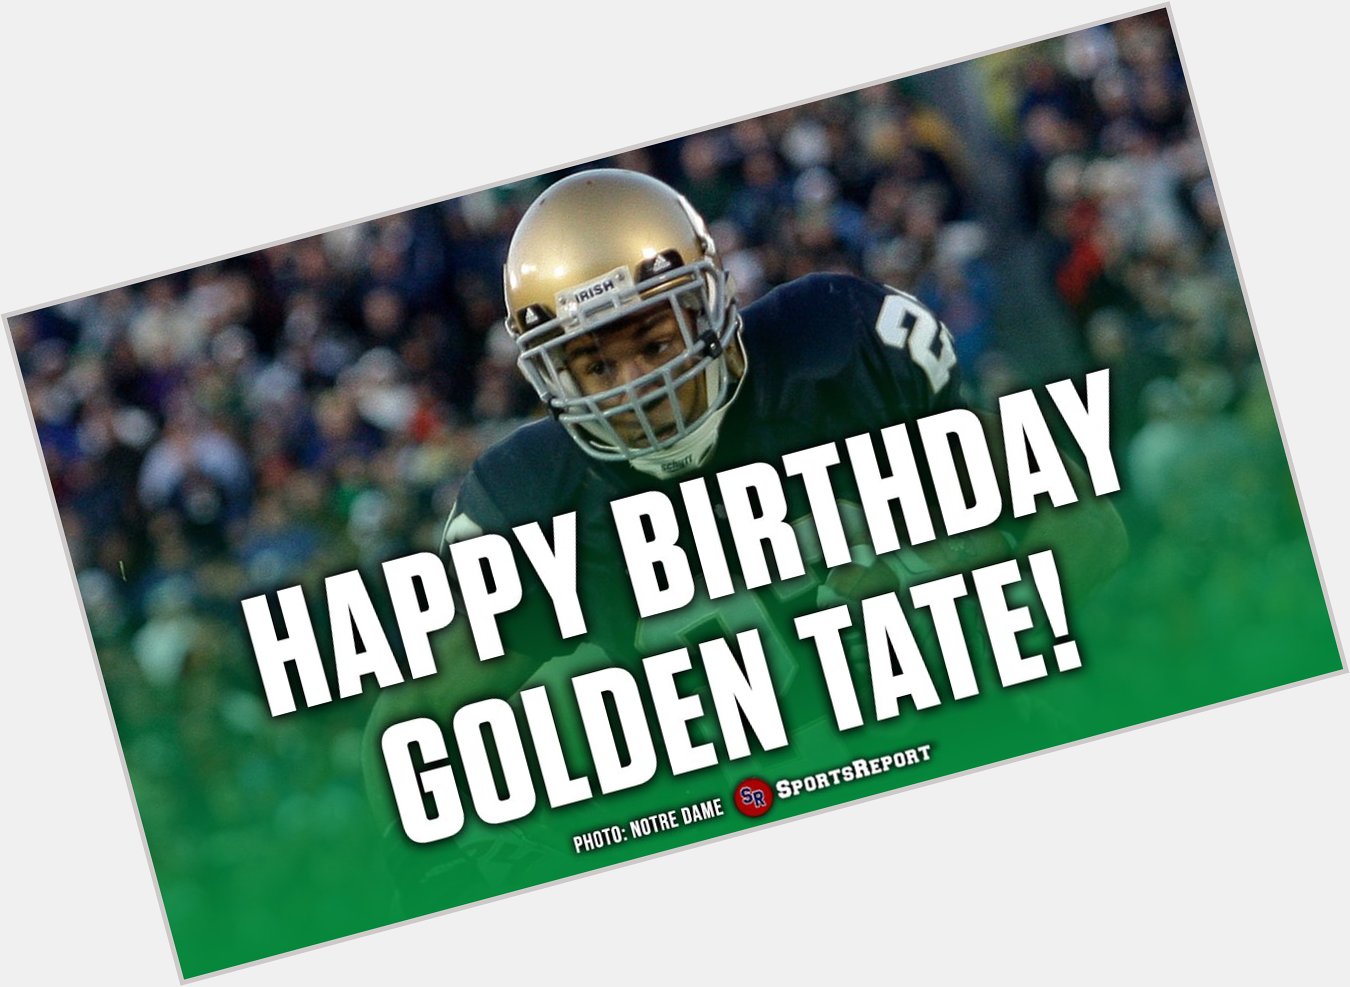  Fans, let\s wish legend Golden Tate a Happy Birthday! GO IRISH!! 